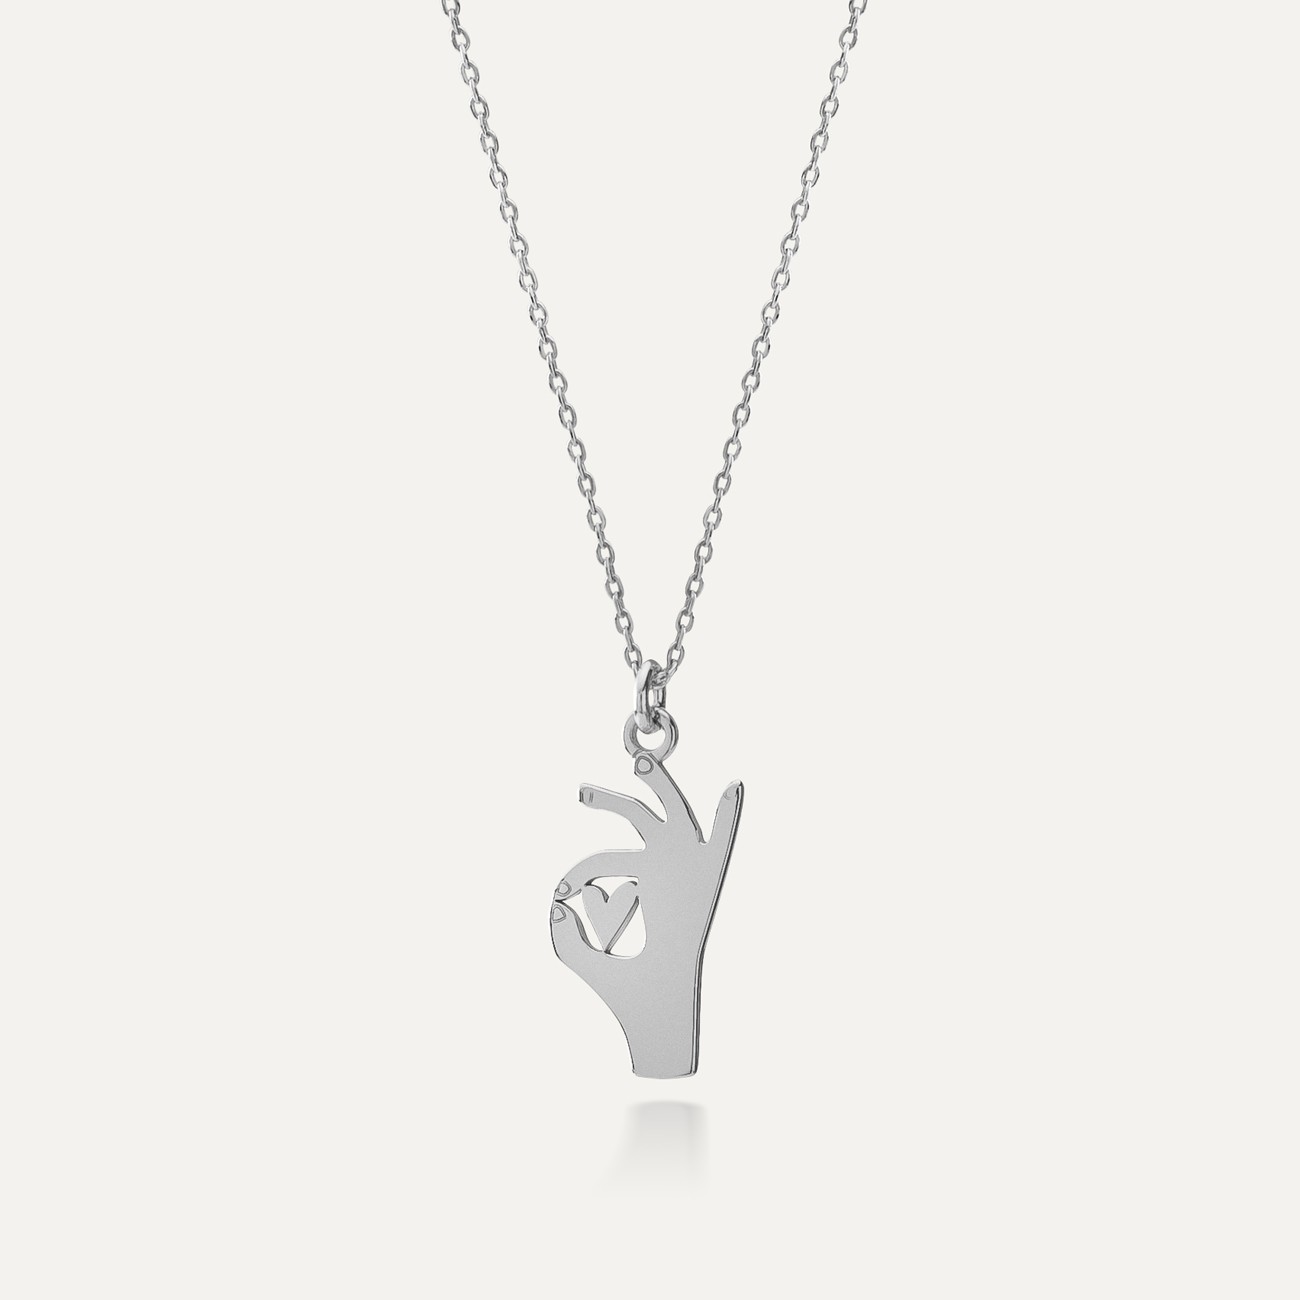 Silver gyan mudra pendant necklace, AUGUSTYNKA x GIORRE